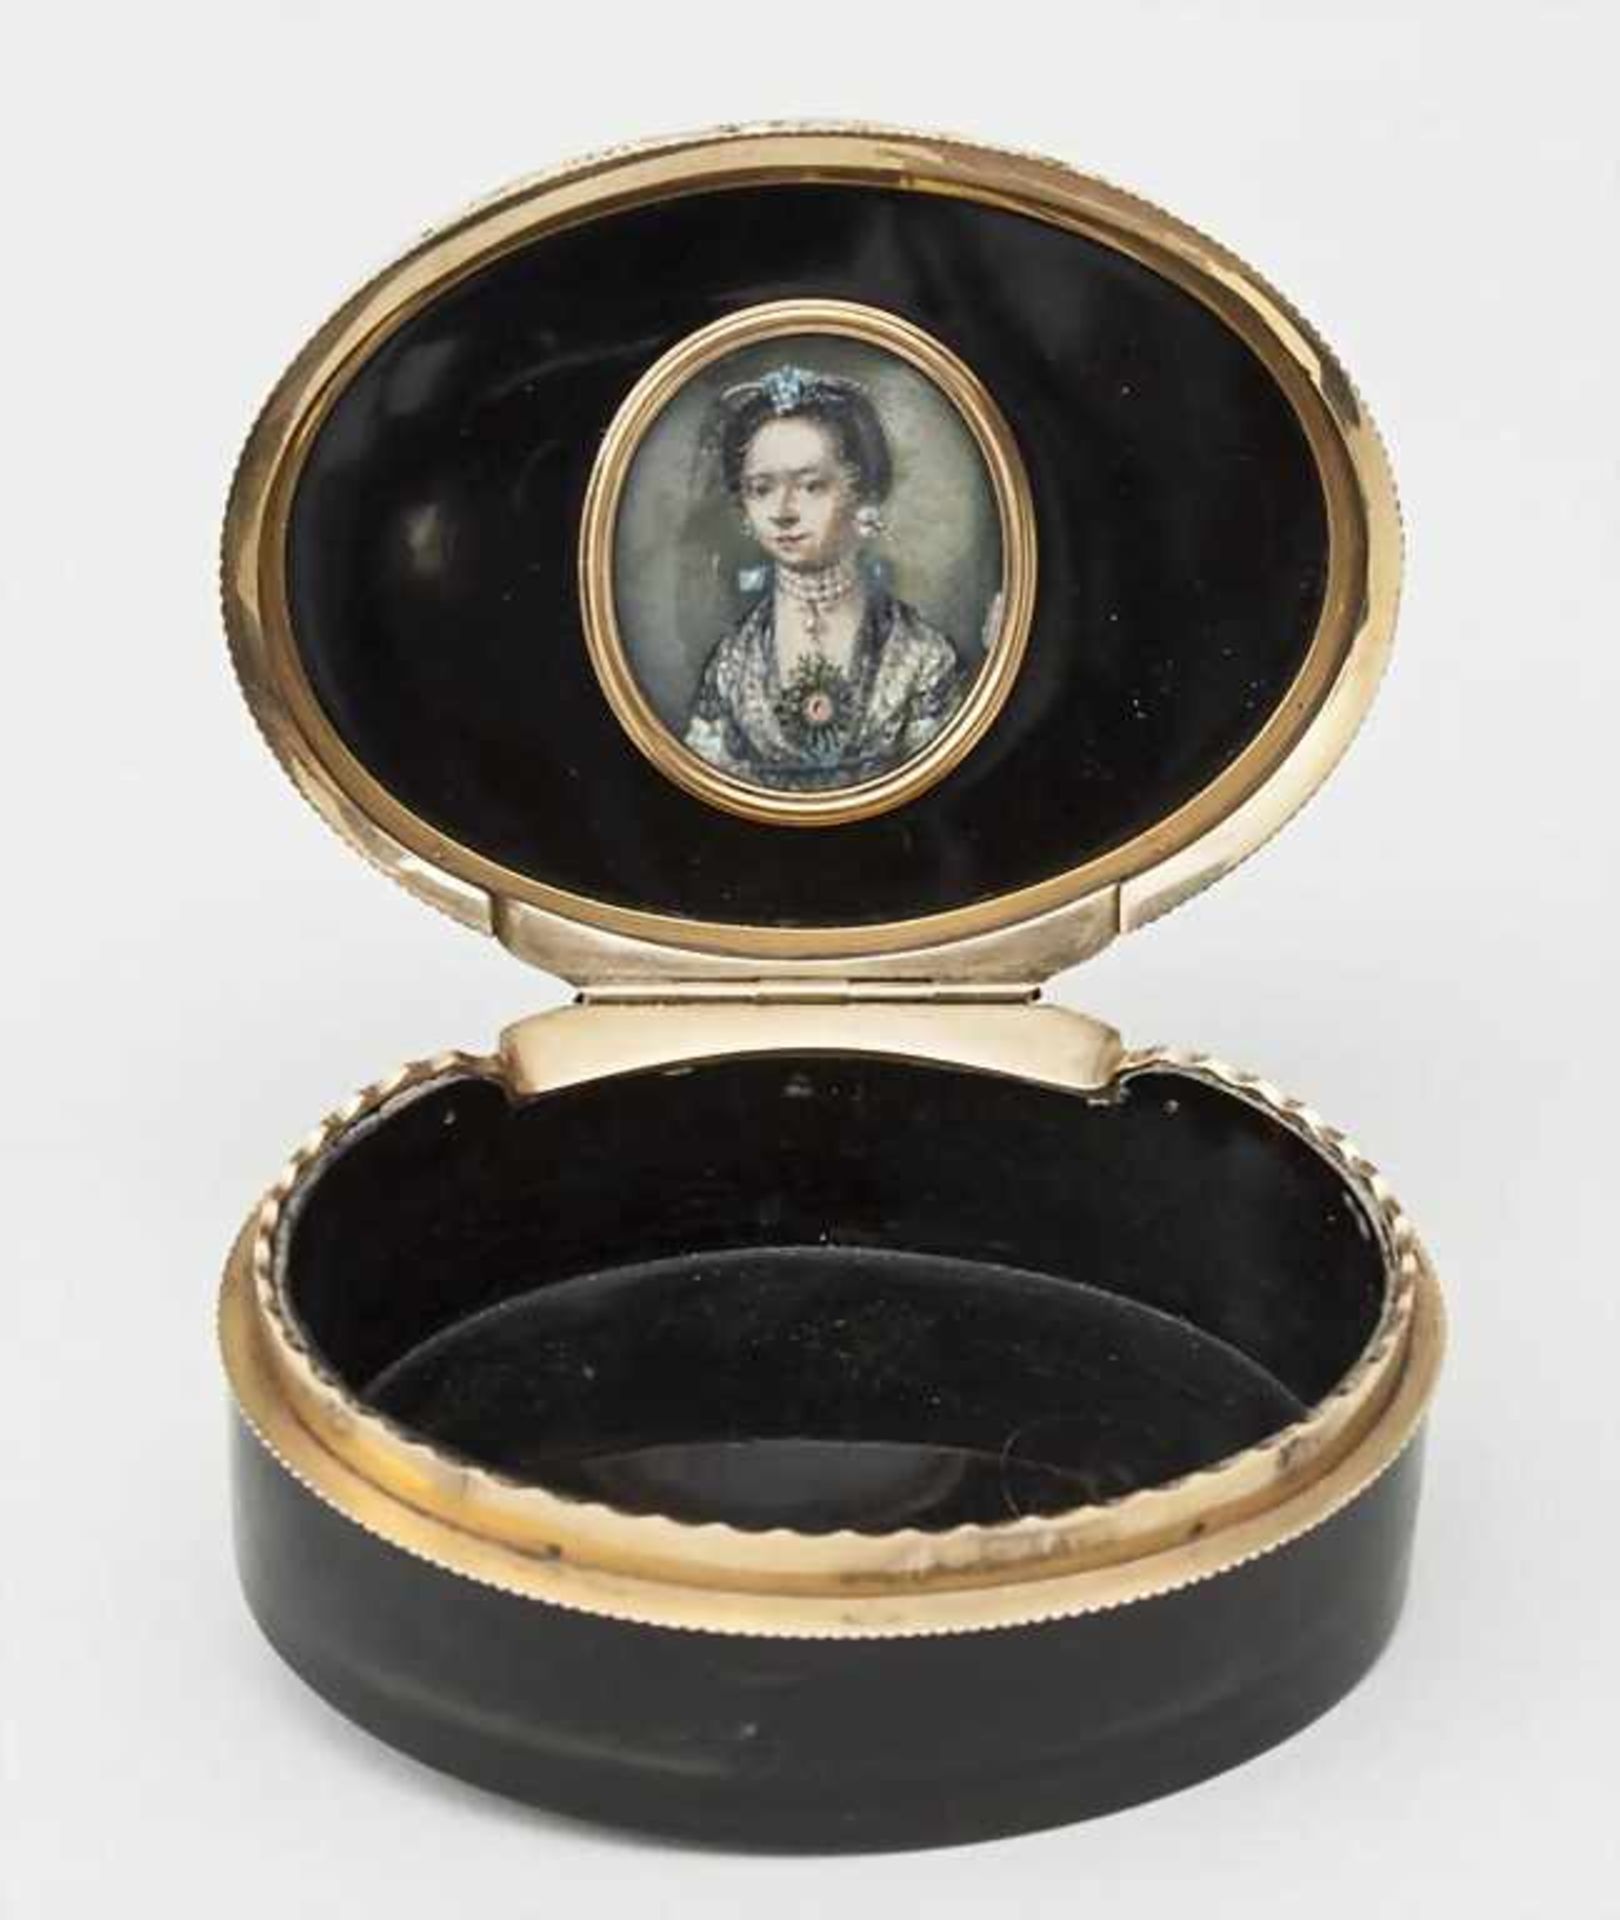 Tabatière mit Miniatur / Snuffbox with Miniature, Paris, ca. 1750Material: Schildpatt, GoldMaße: